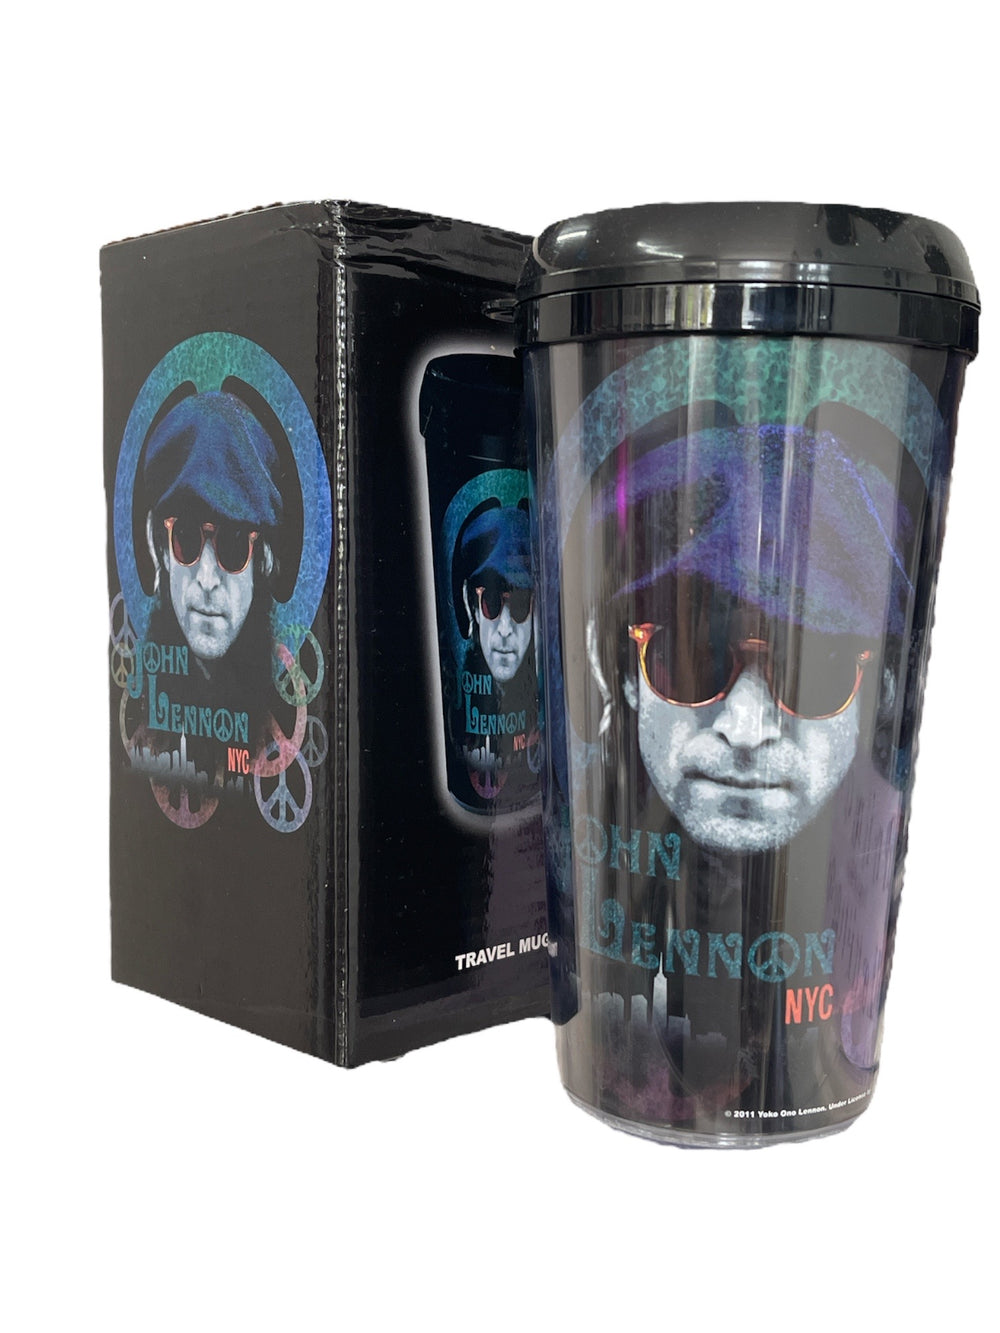 John Lennon Beatles The PEACE NYC The Beatles Plastic Travel Mug Boxed Official Brand New